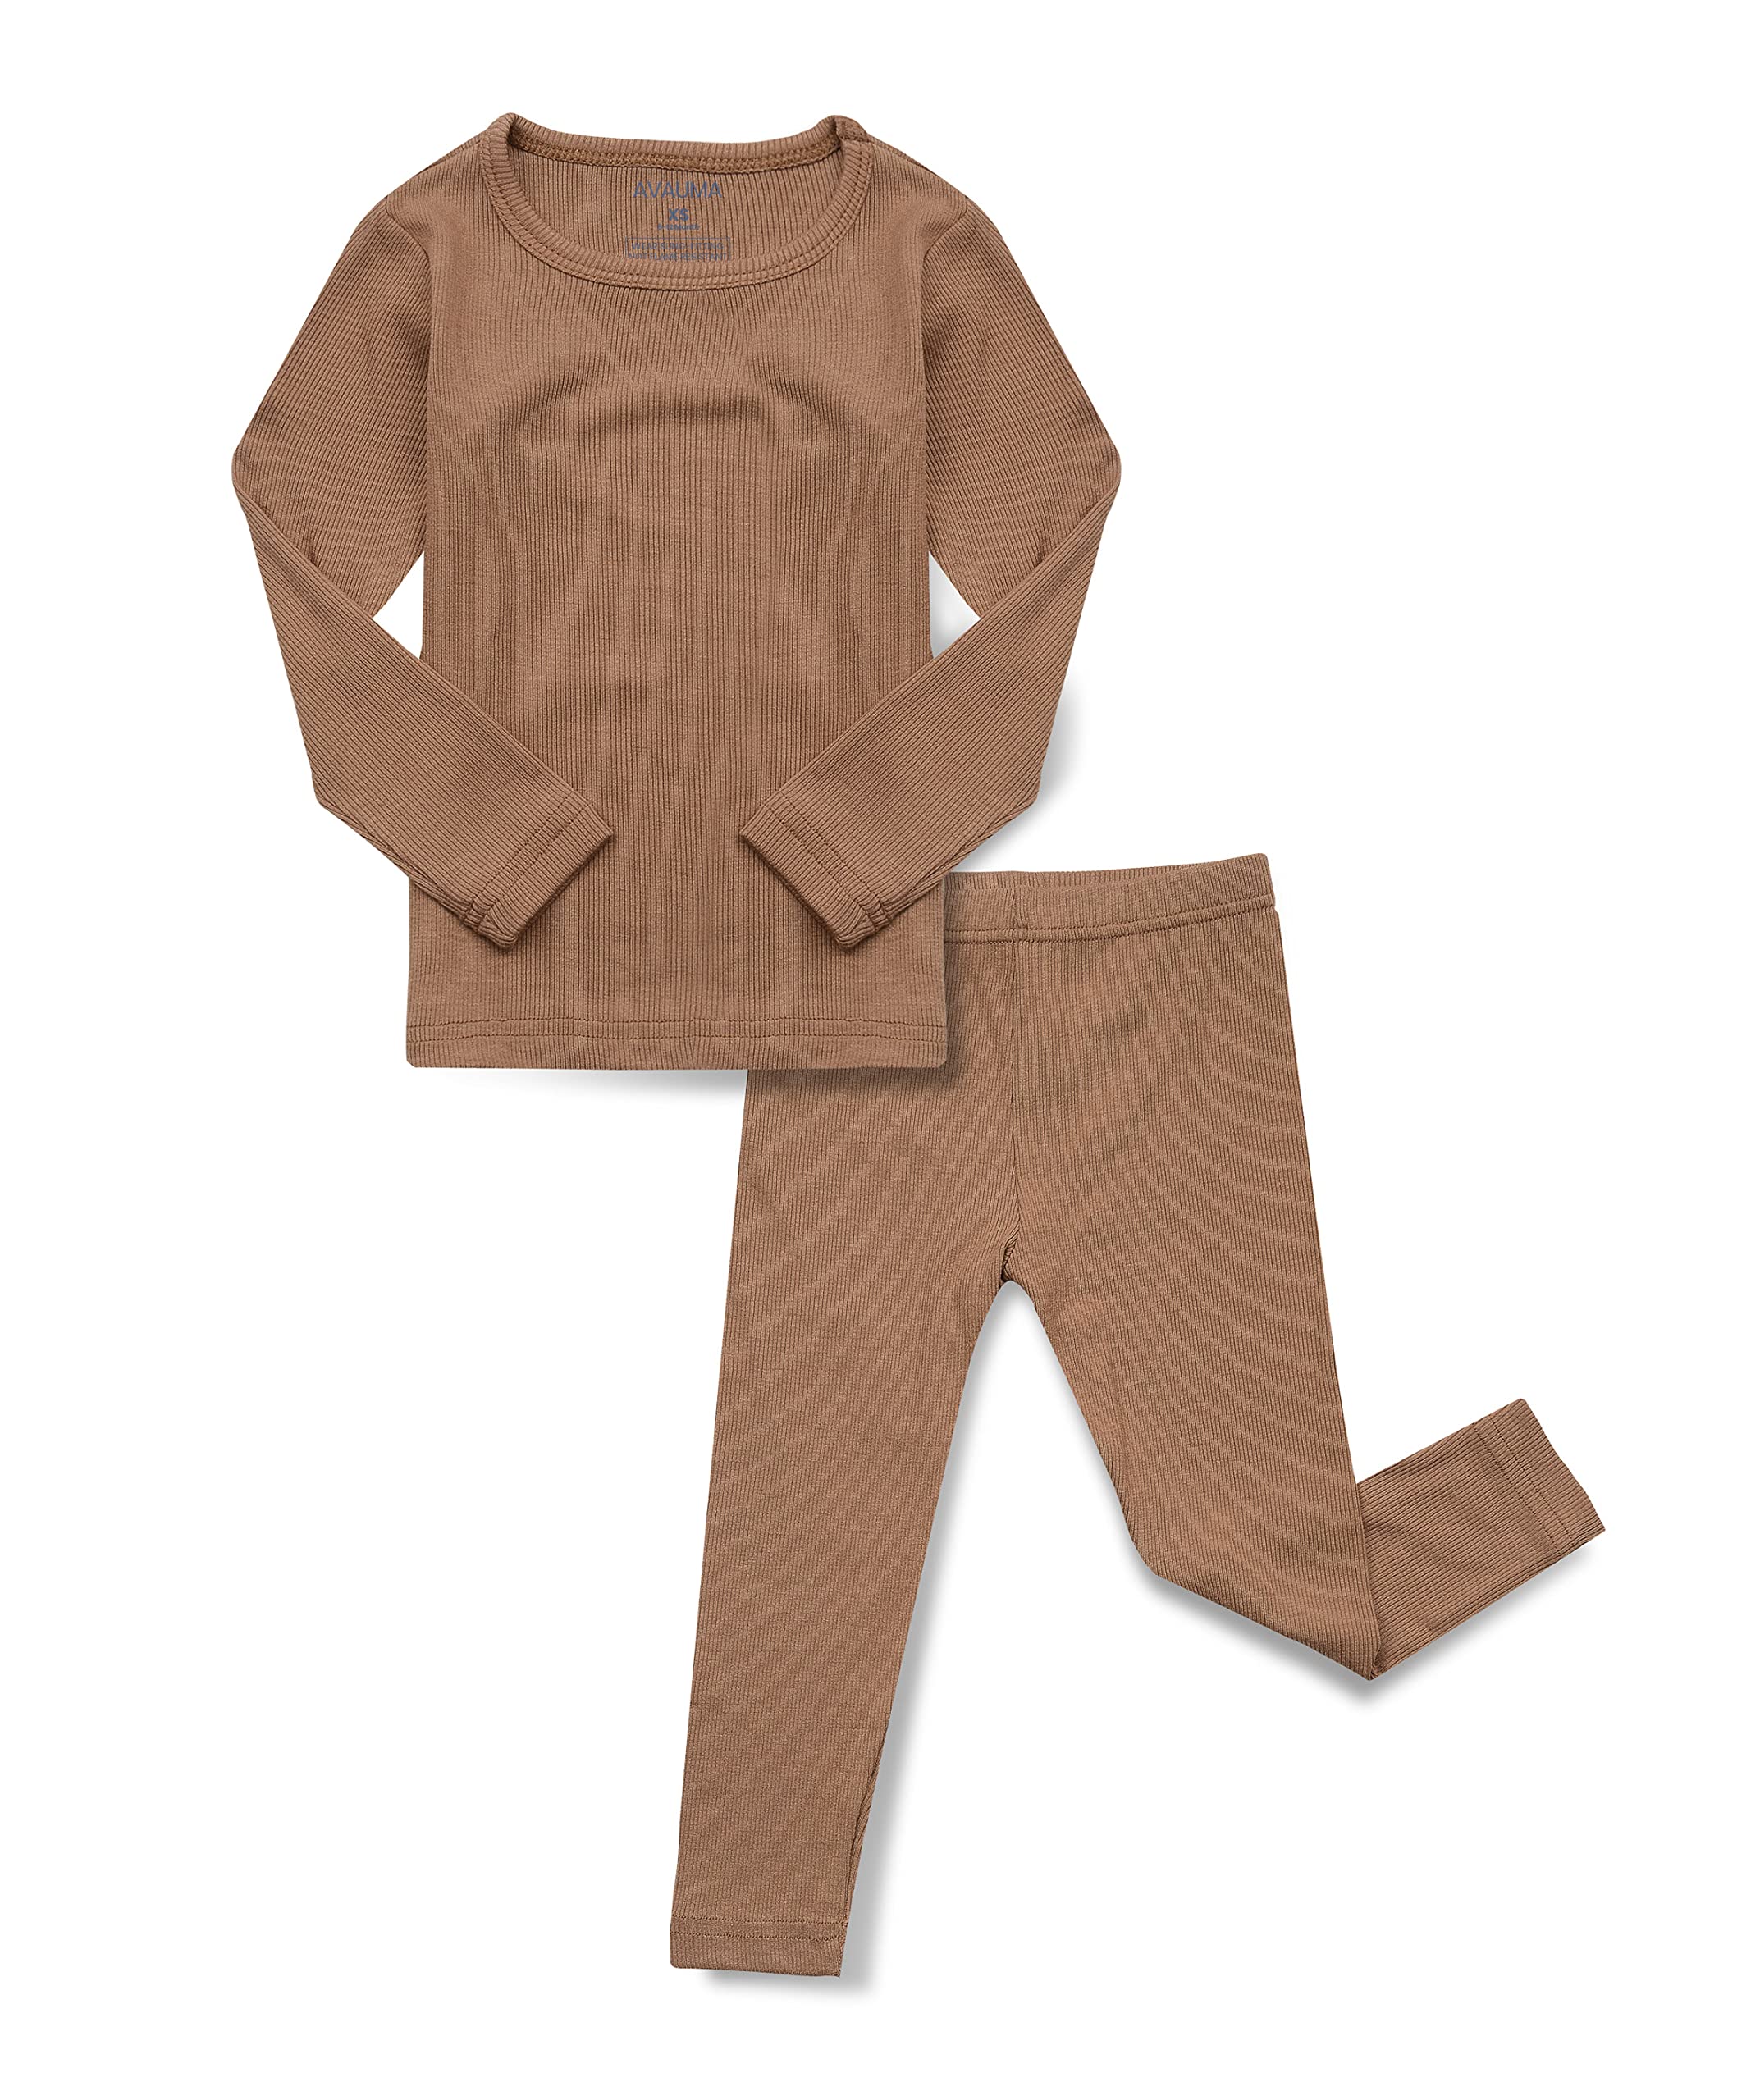 AVAUMA Baby Boys girls Pajama Set Kids Toddler Snug fit Ribbed Sleepwear pjs for Daily Life Style (Scamel(L))